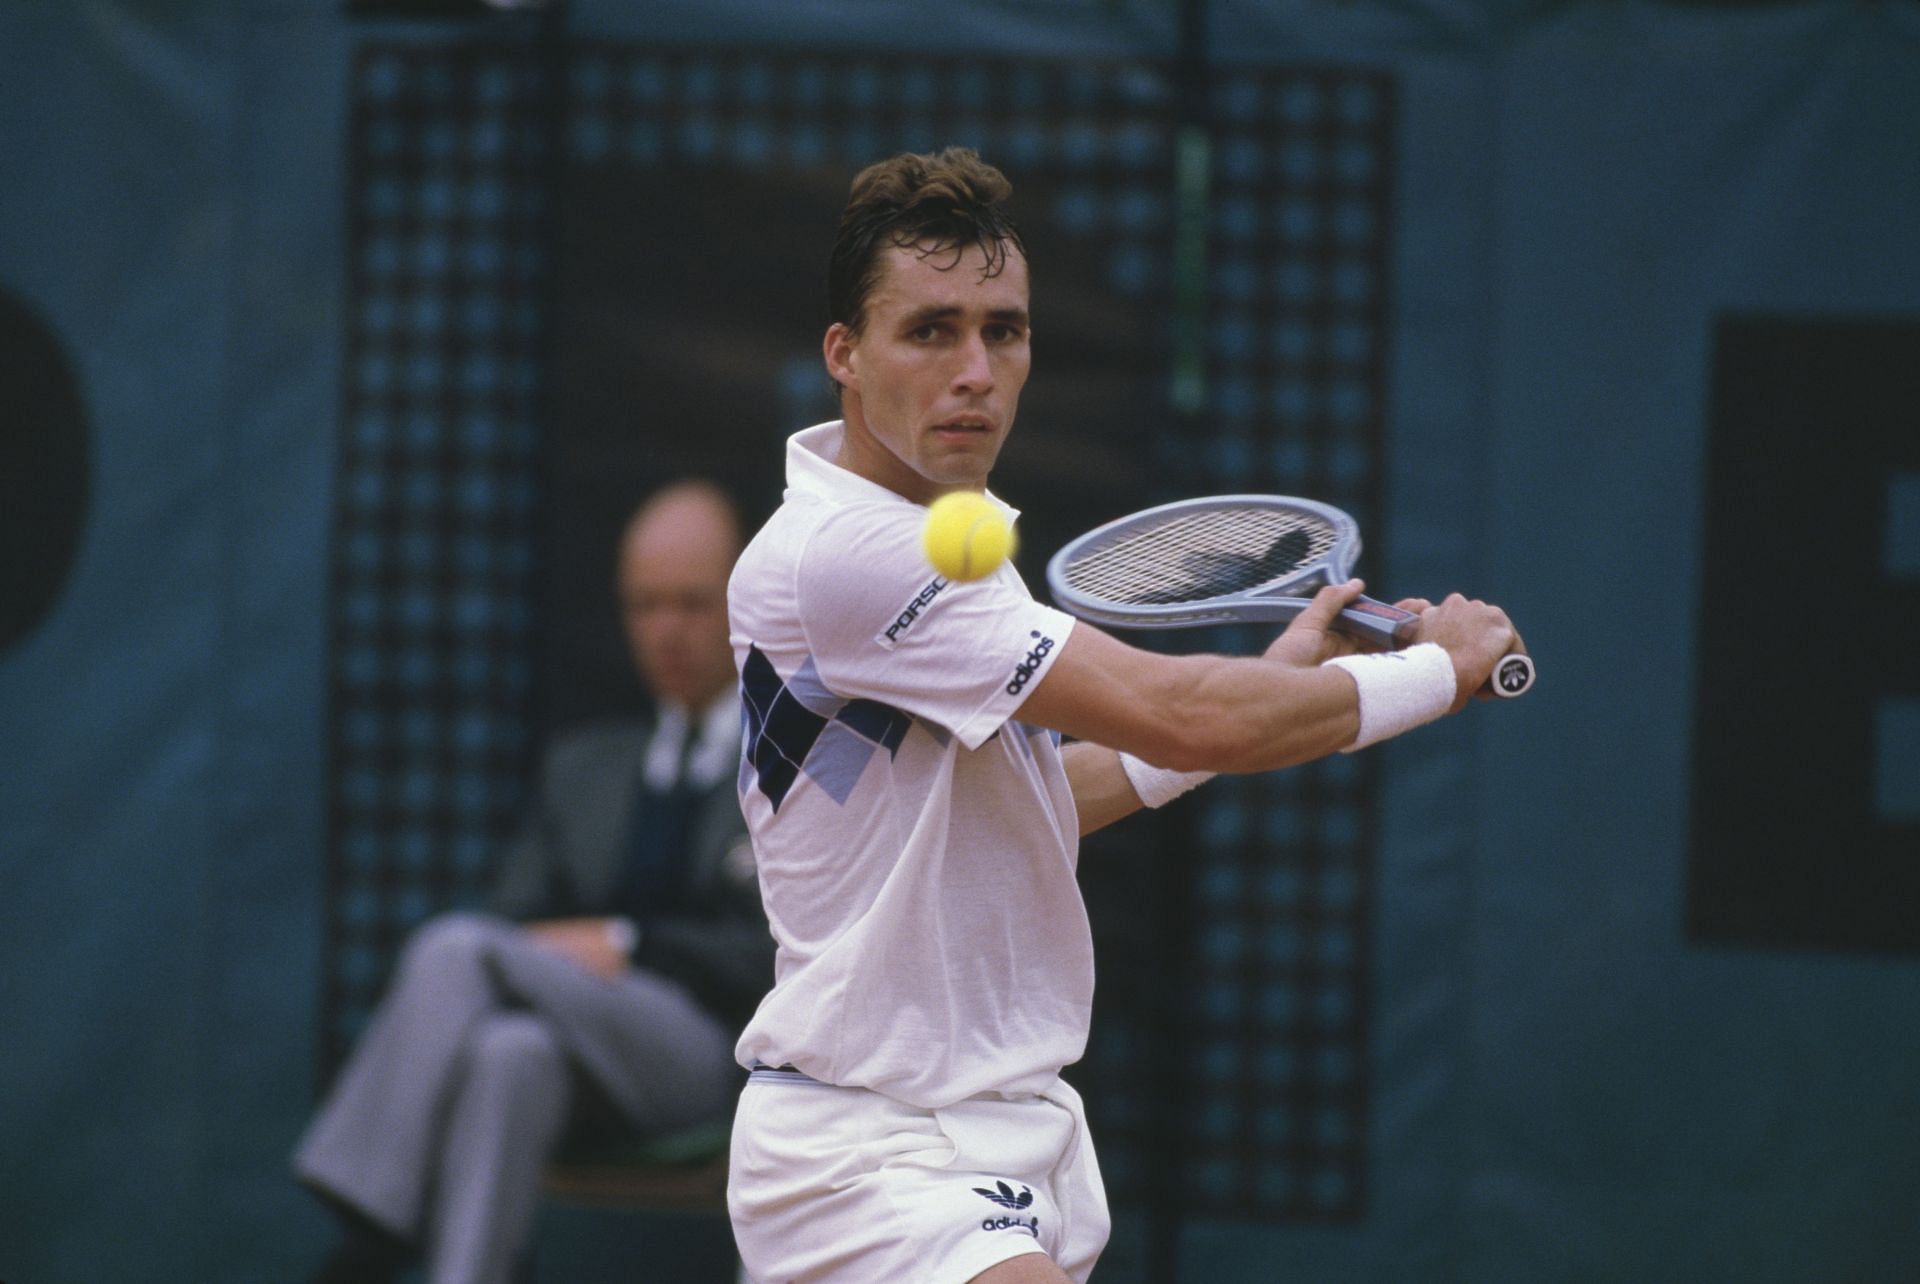 Ivan Lendl is a three-time Roland Garros winner